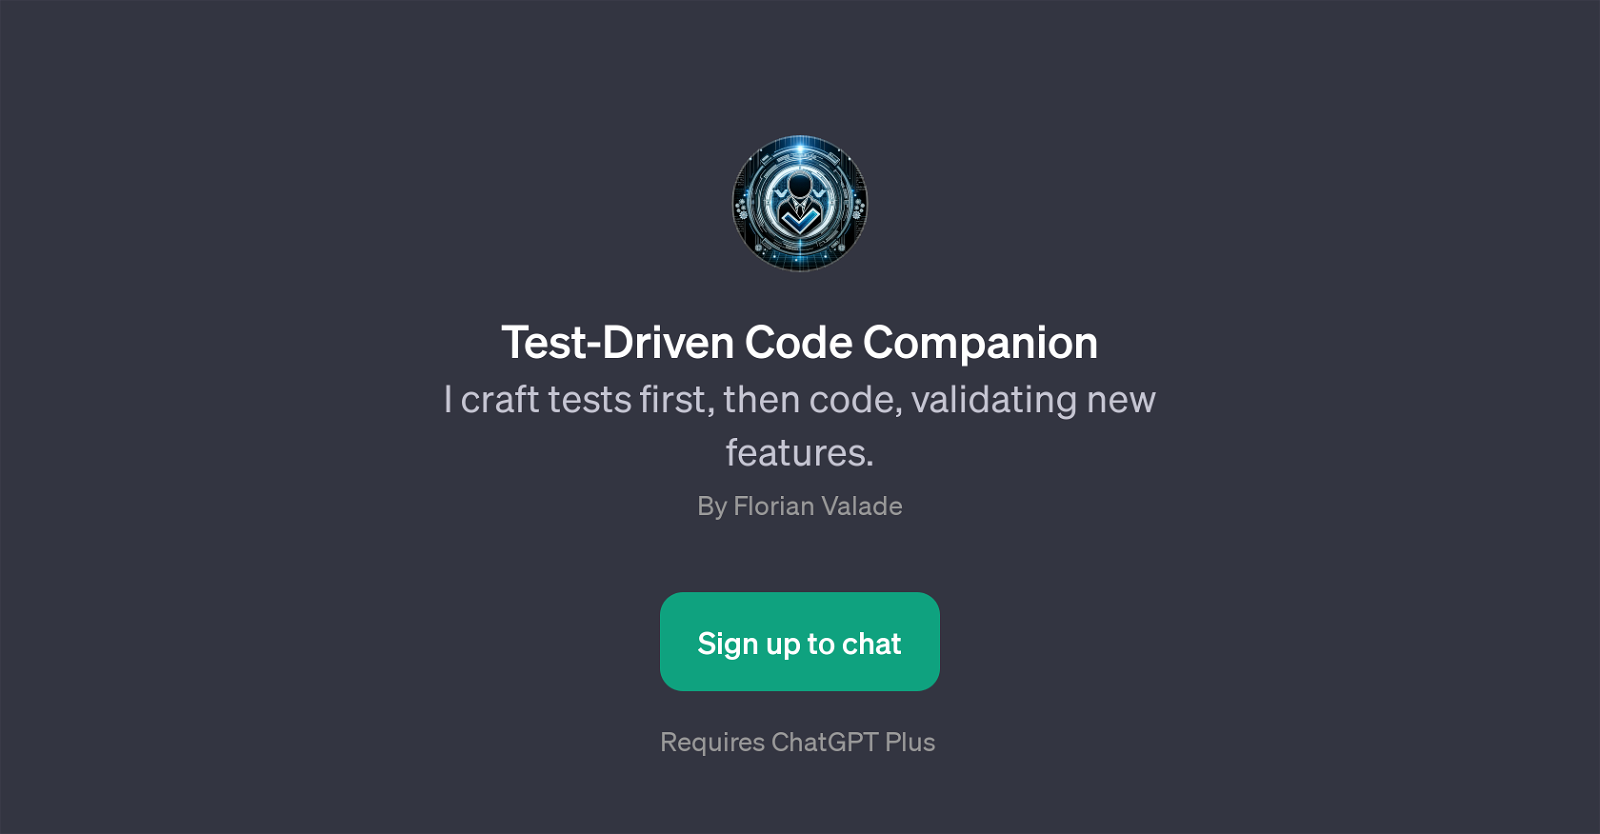 Test-Driven Code Companion website